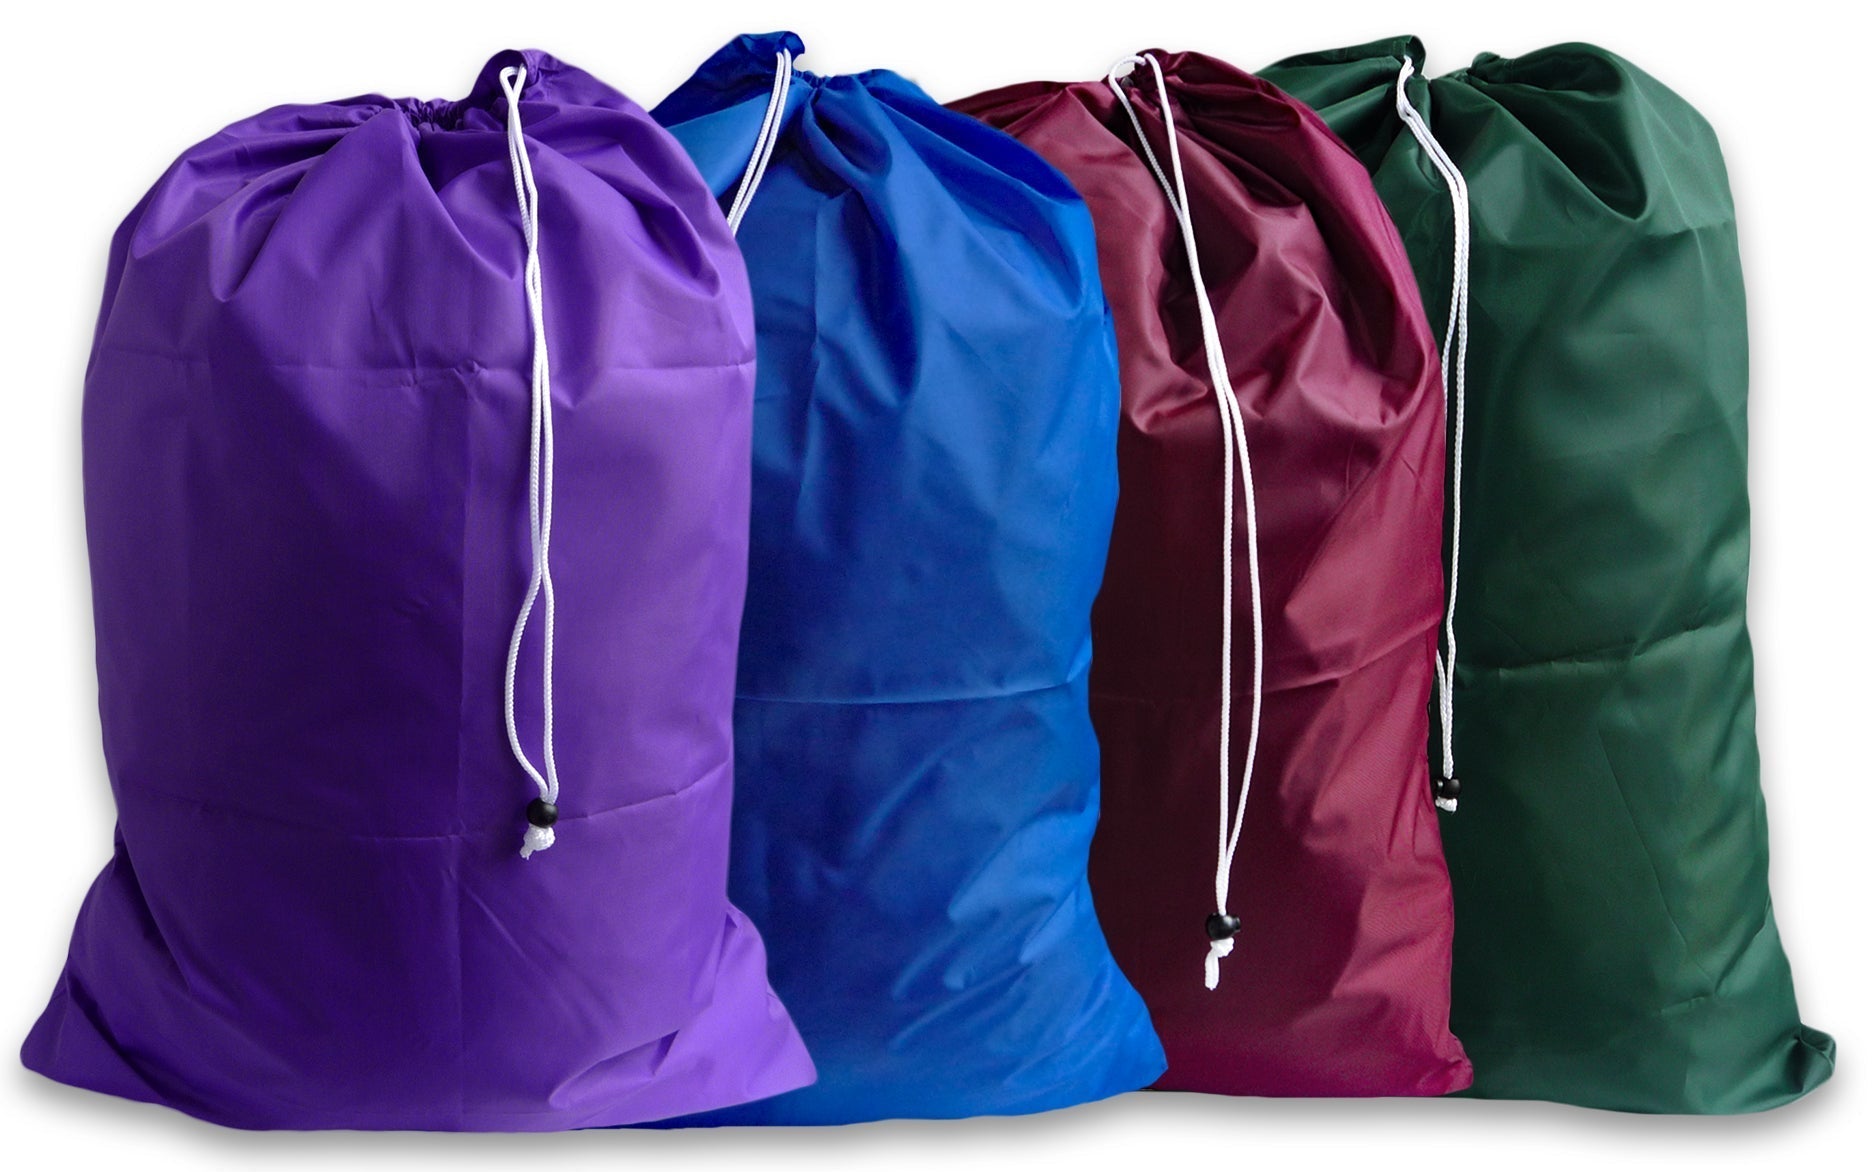 Medium 24x36 Laundry Bags, Assorted Colors